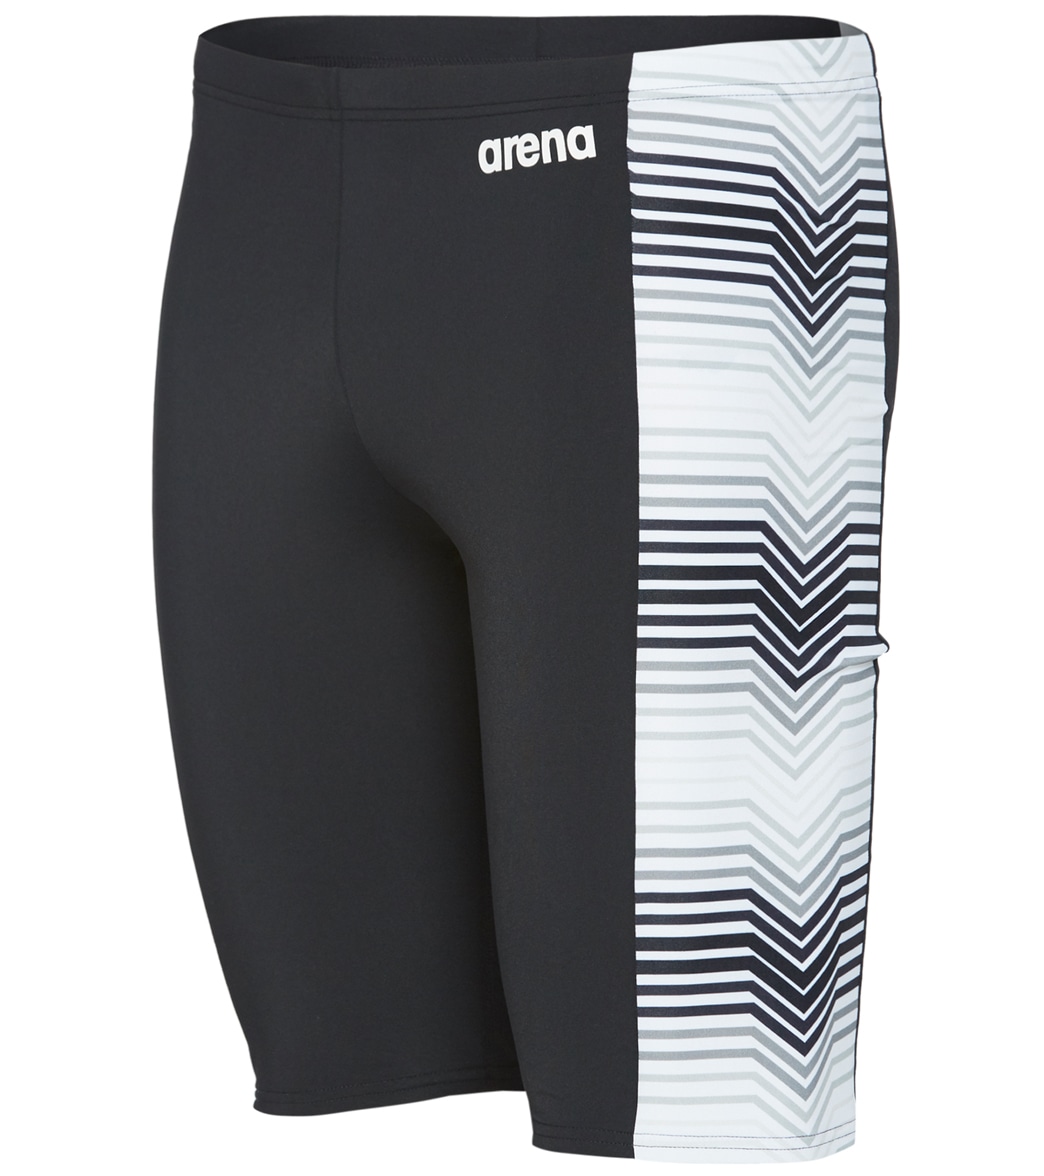 Arena Men's Multicolor Stripes Maxlife Jammer Swimsuit - Black/Black/Multi 22 - Swimoutlet.com